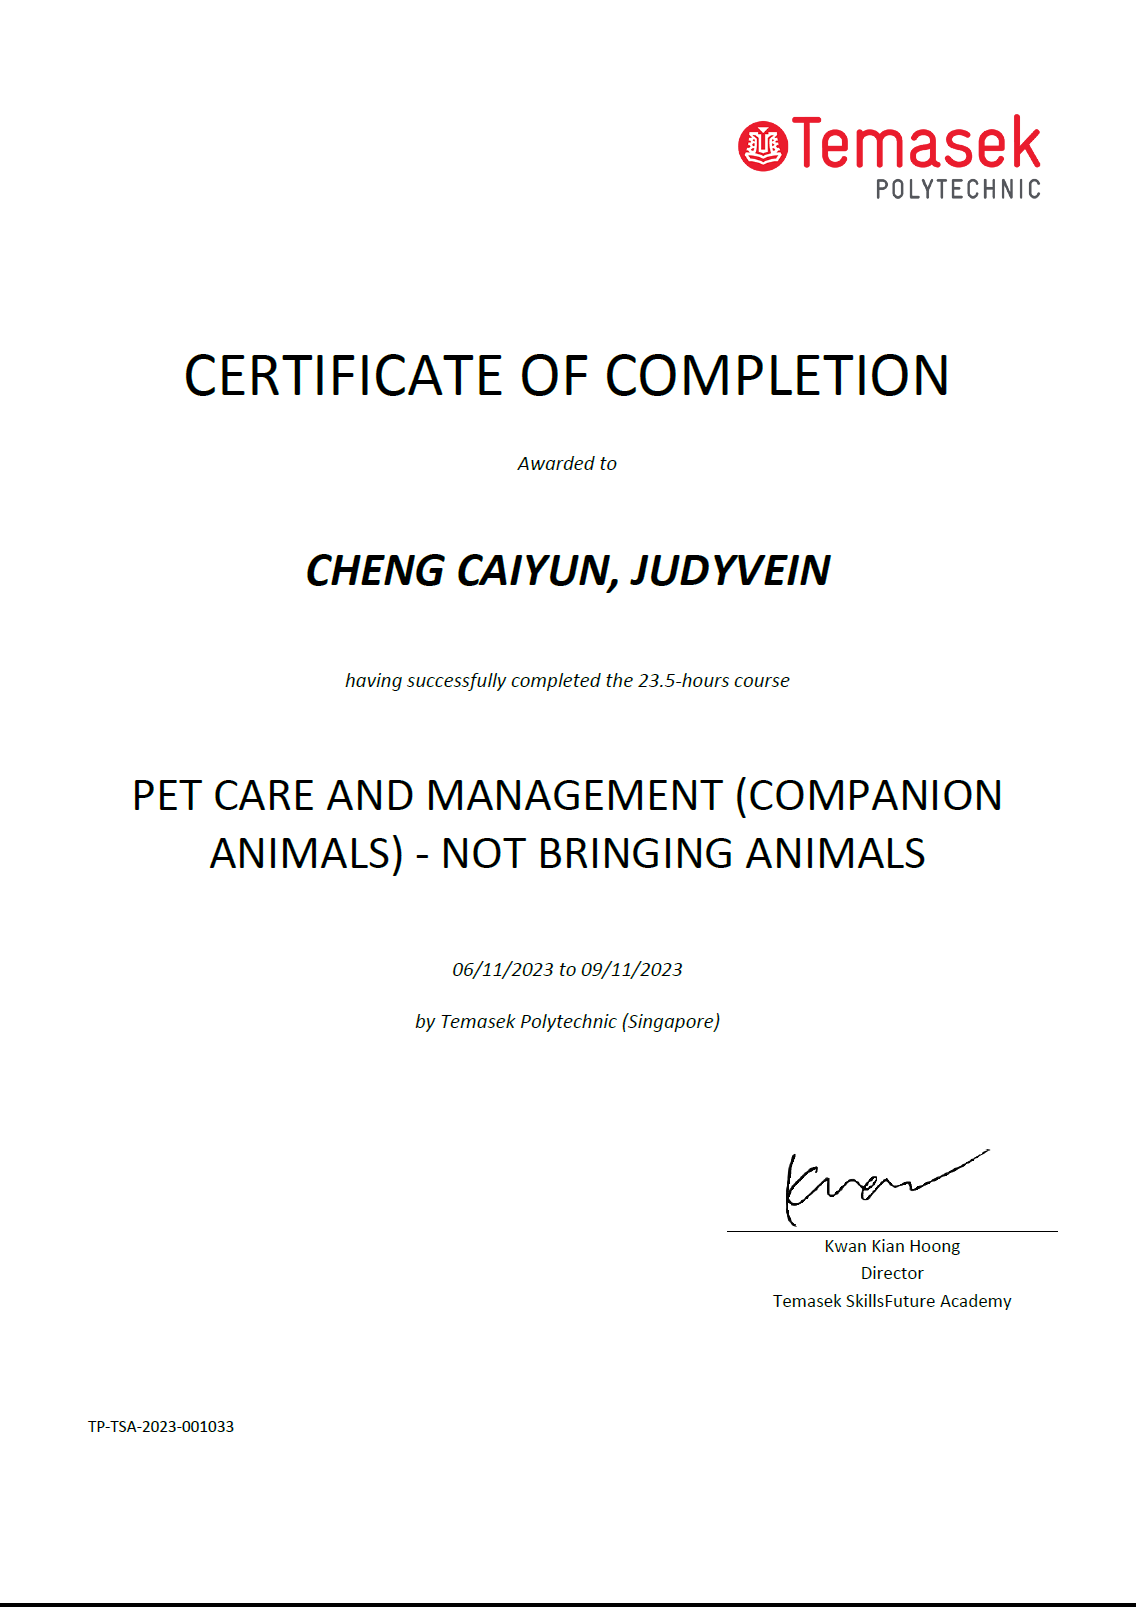 Pet Care and Management cert